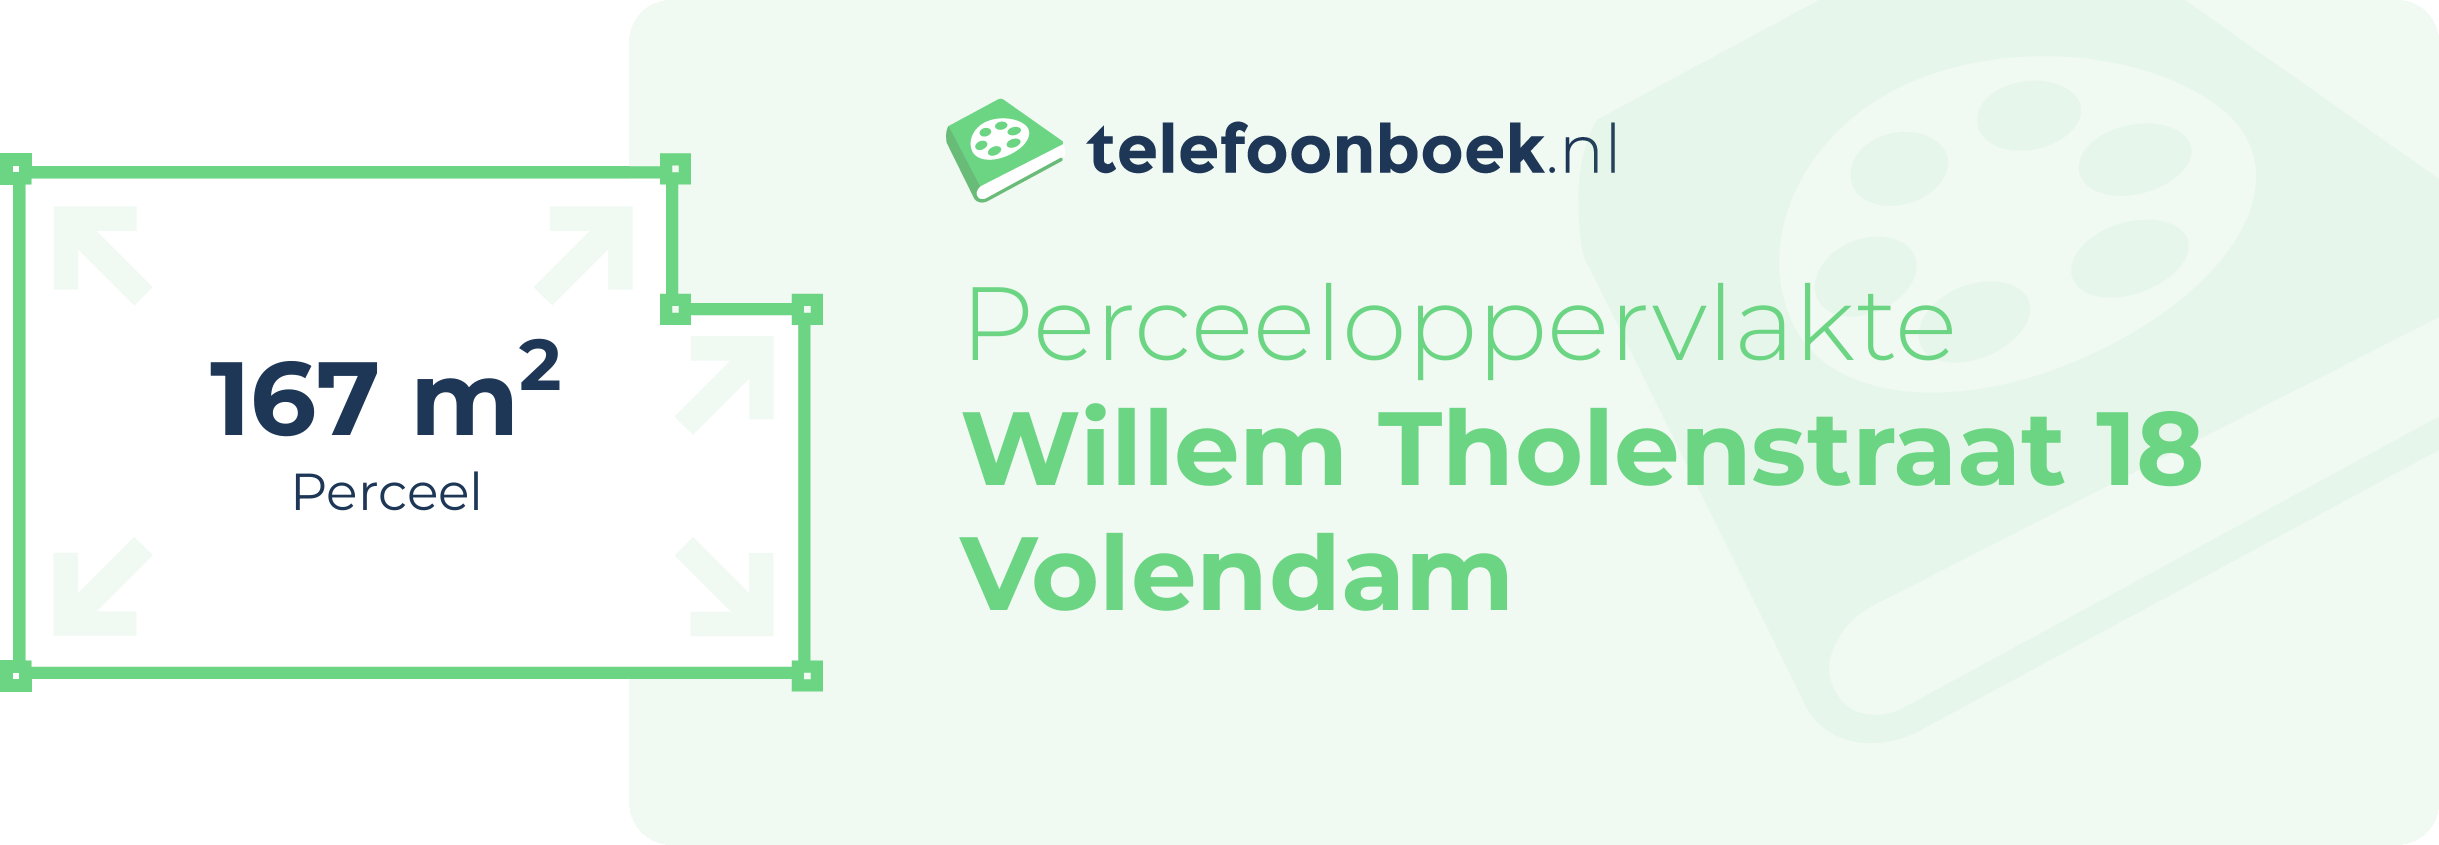 Perceeloppervlakte Willem Tholenstraat 18 Volendam